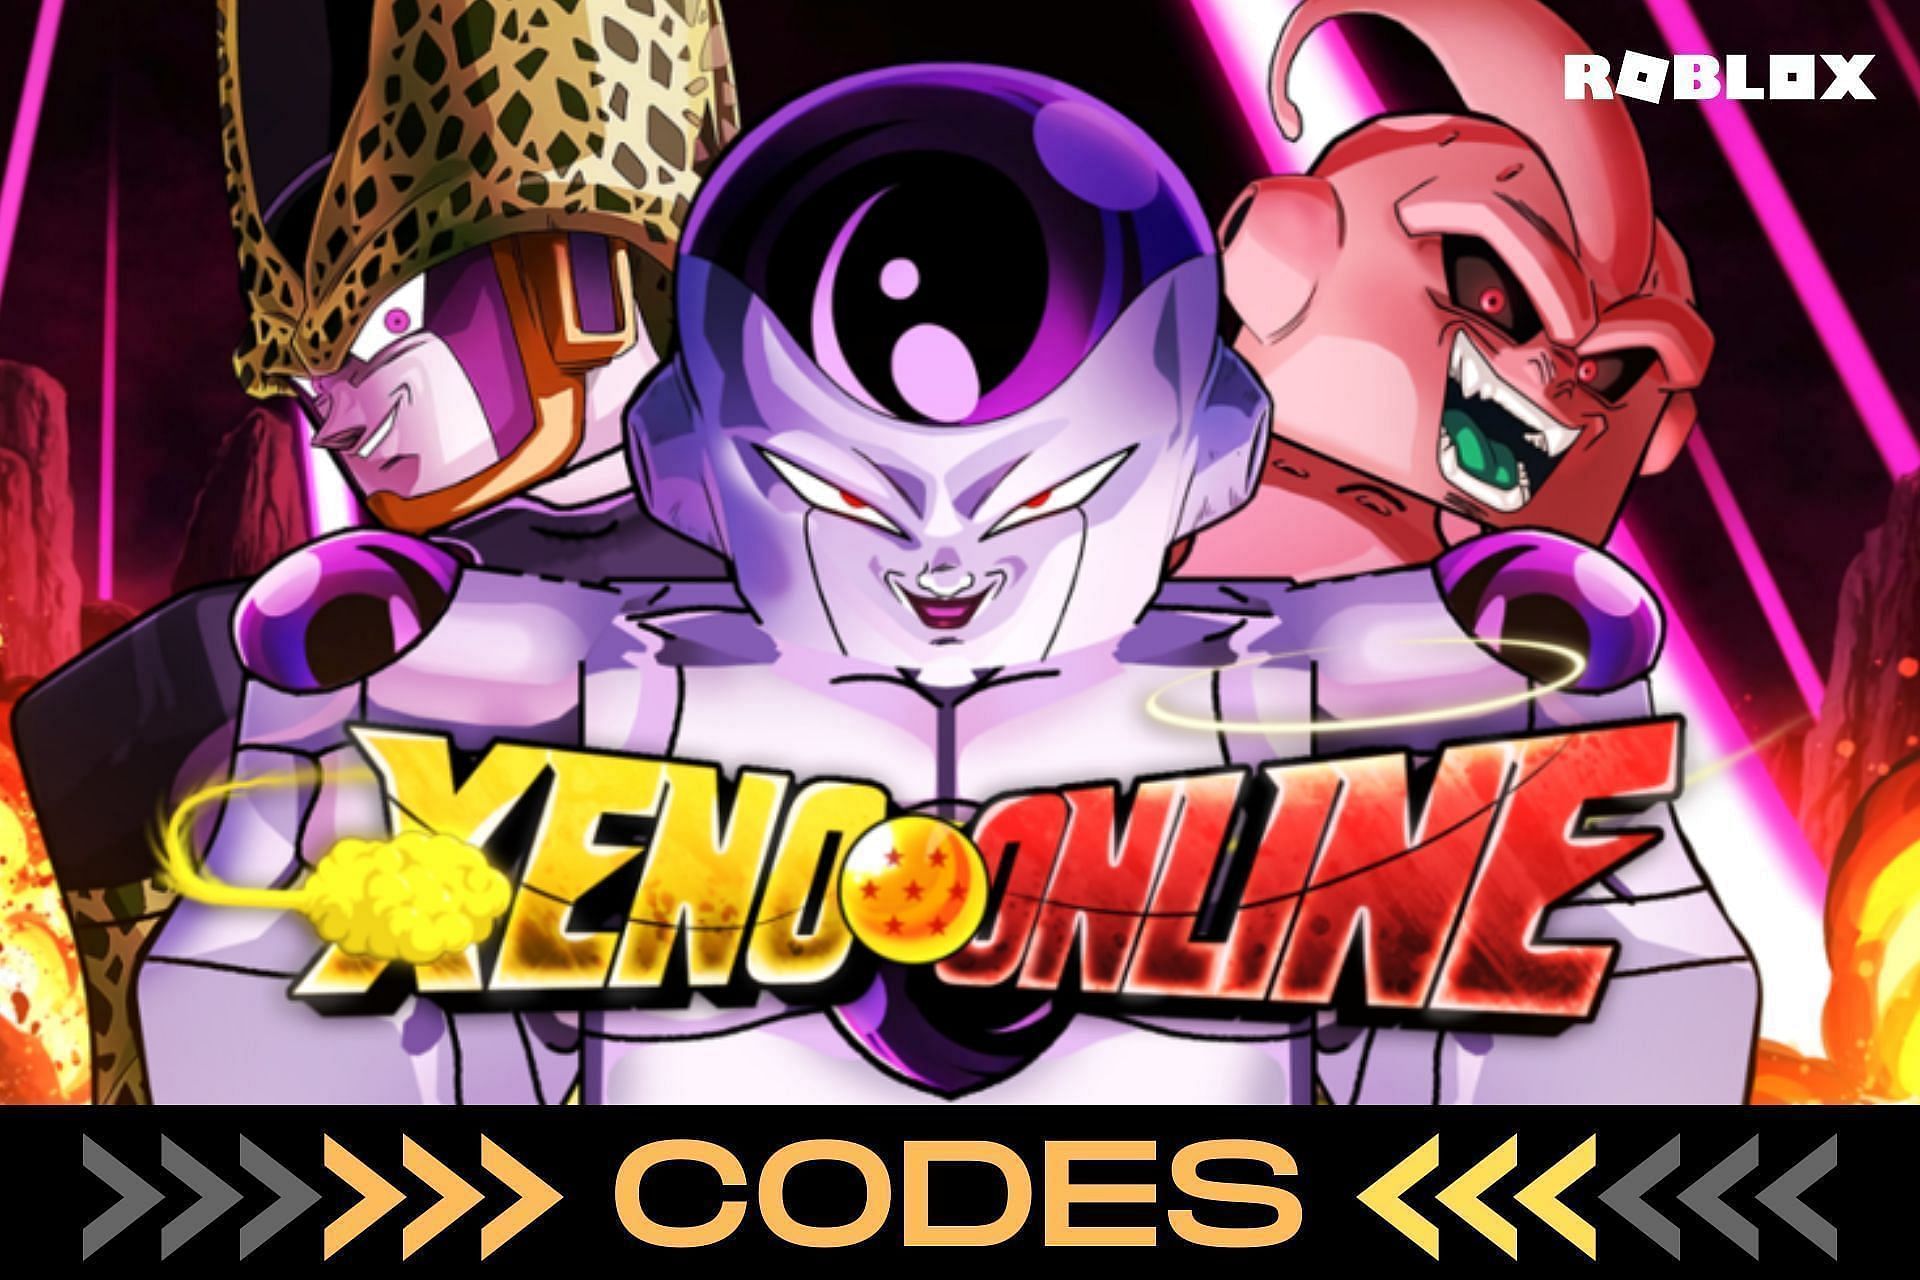 Featured image of Xeno Online 2 codes (Image via Sportskeeda)